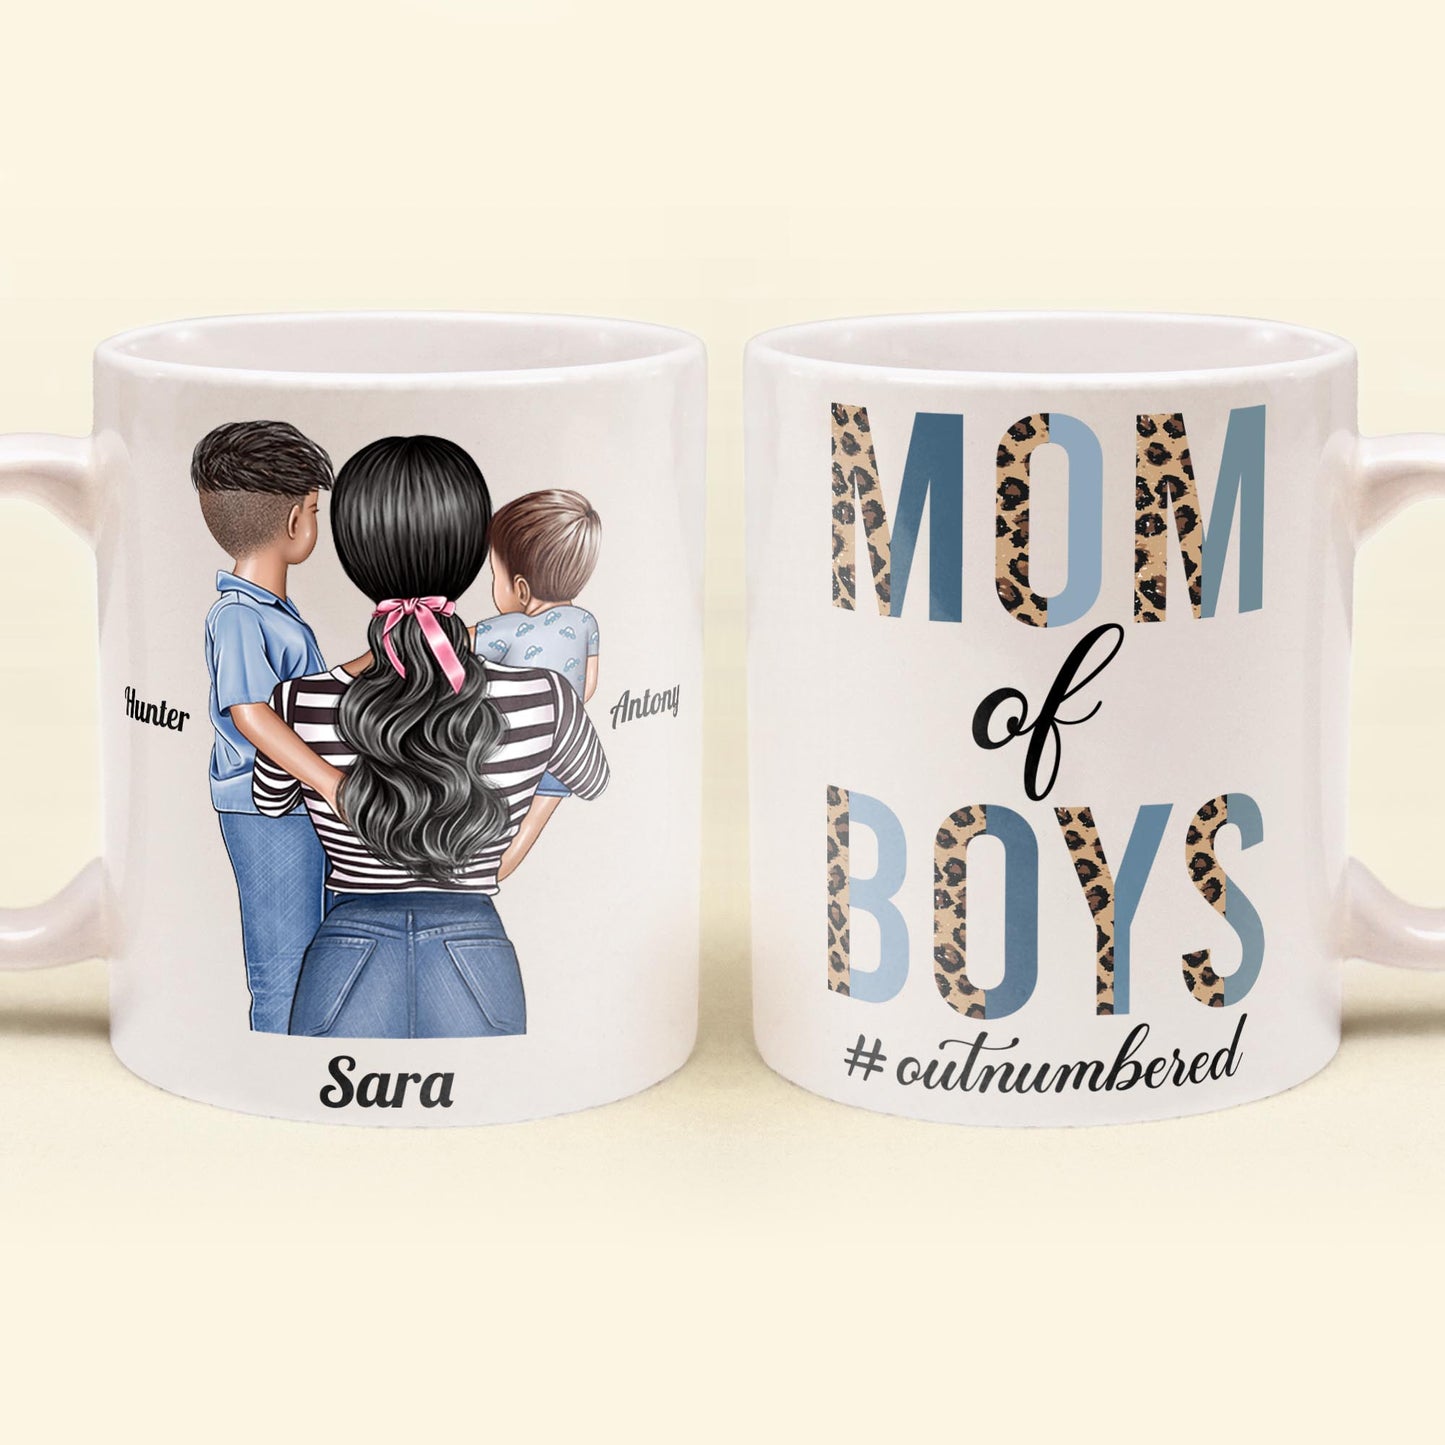 Mom Of Boys Outnumbered - Personalized Mug